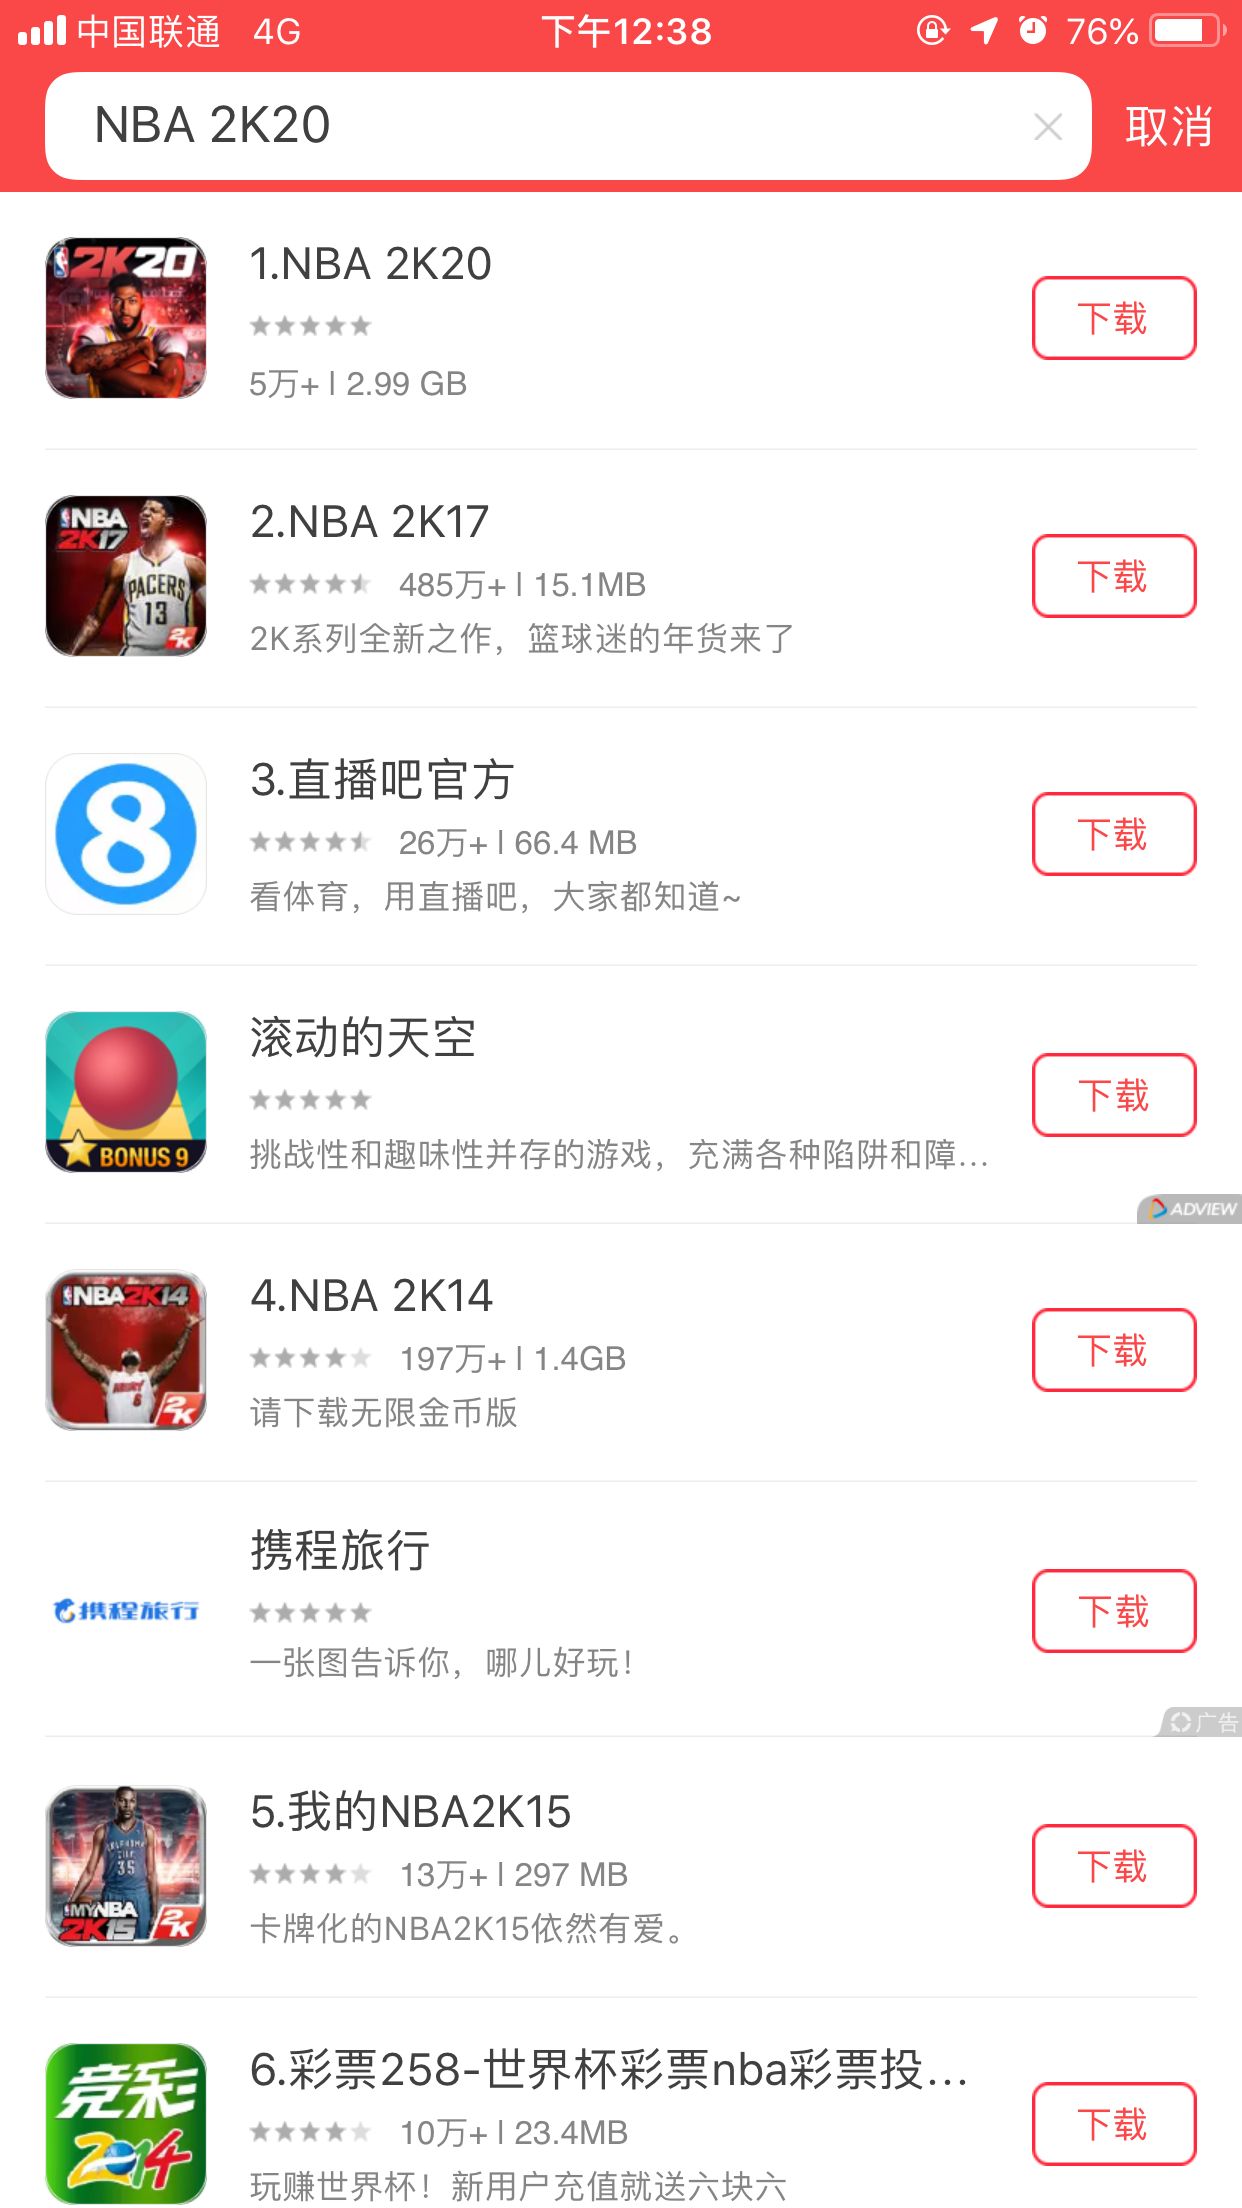 《NBA 2K20》手游苹果IOS版无需付费免费下载地址分享